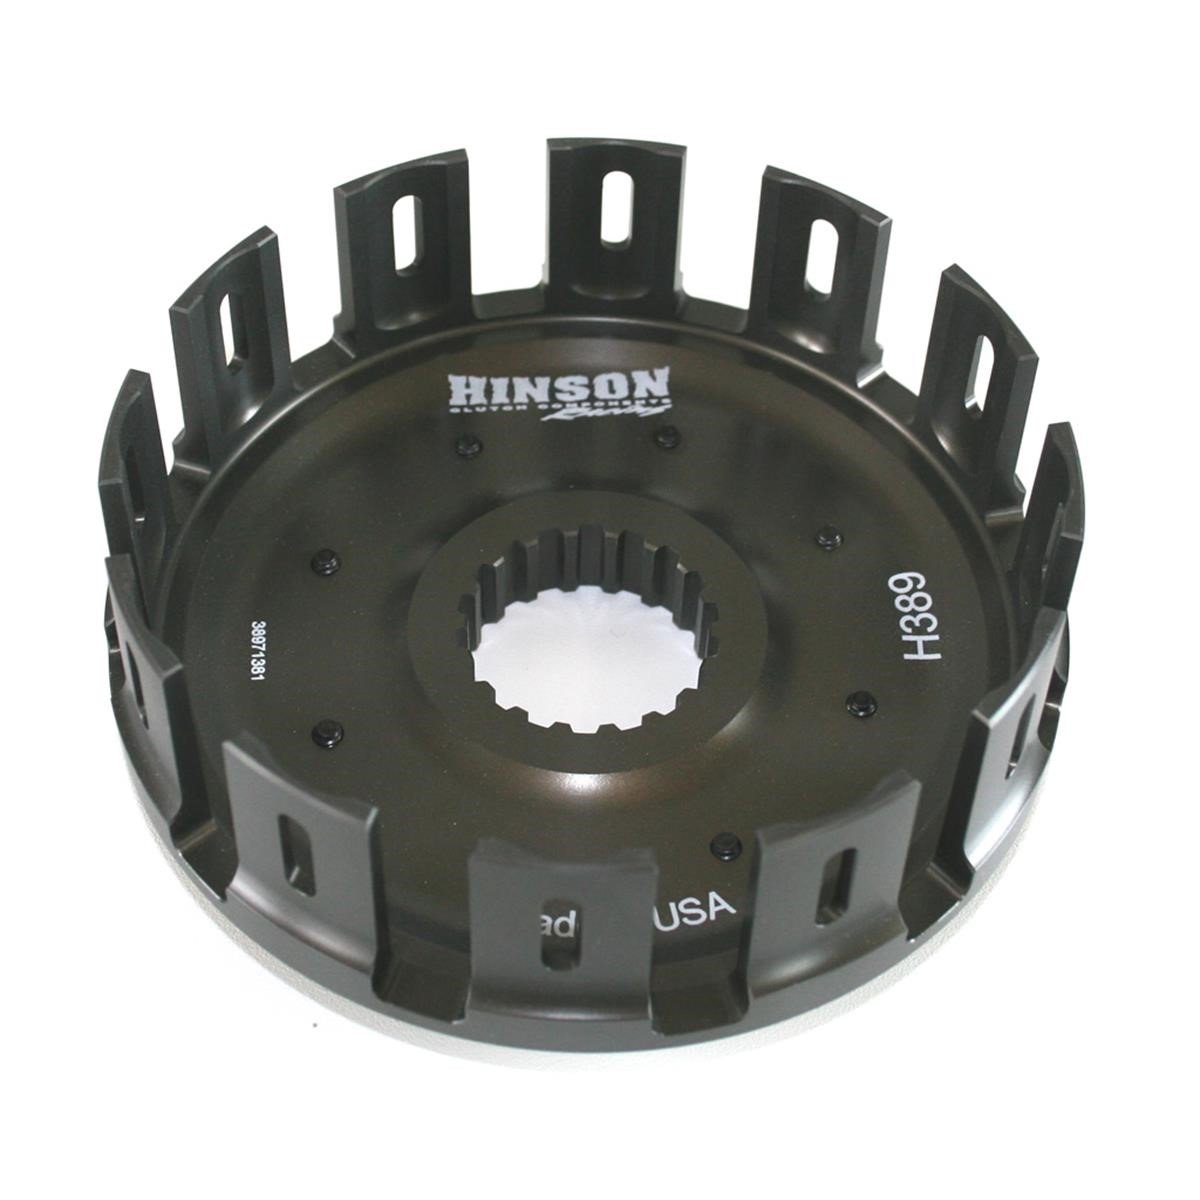 Hinson Kupplungskorb Billetproof inkl. Ruckdämpfer, Yamaha YZ 450F 07-20, WR 450F 04-09, 11-19